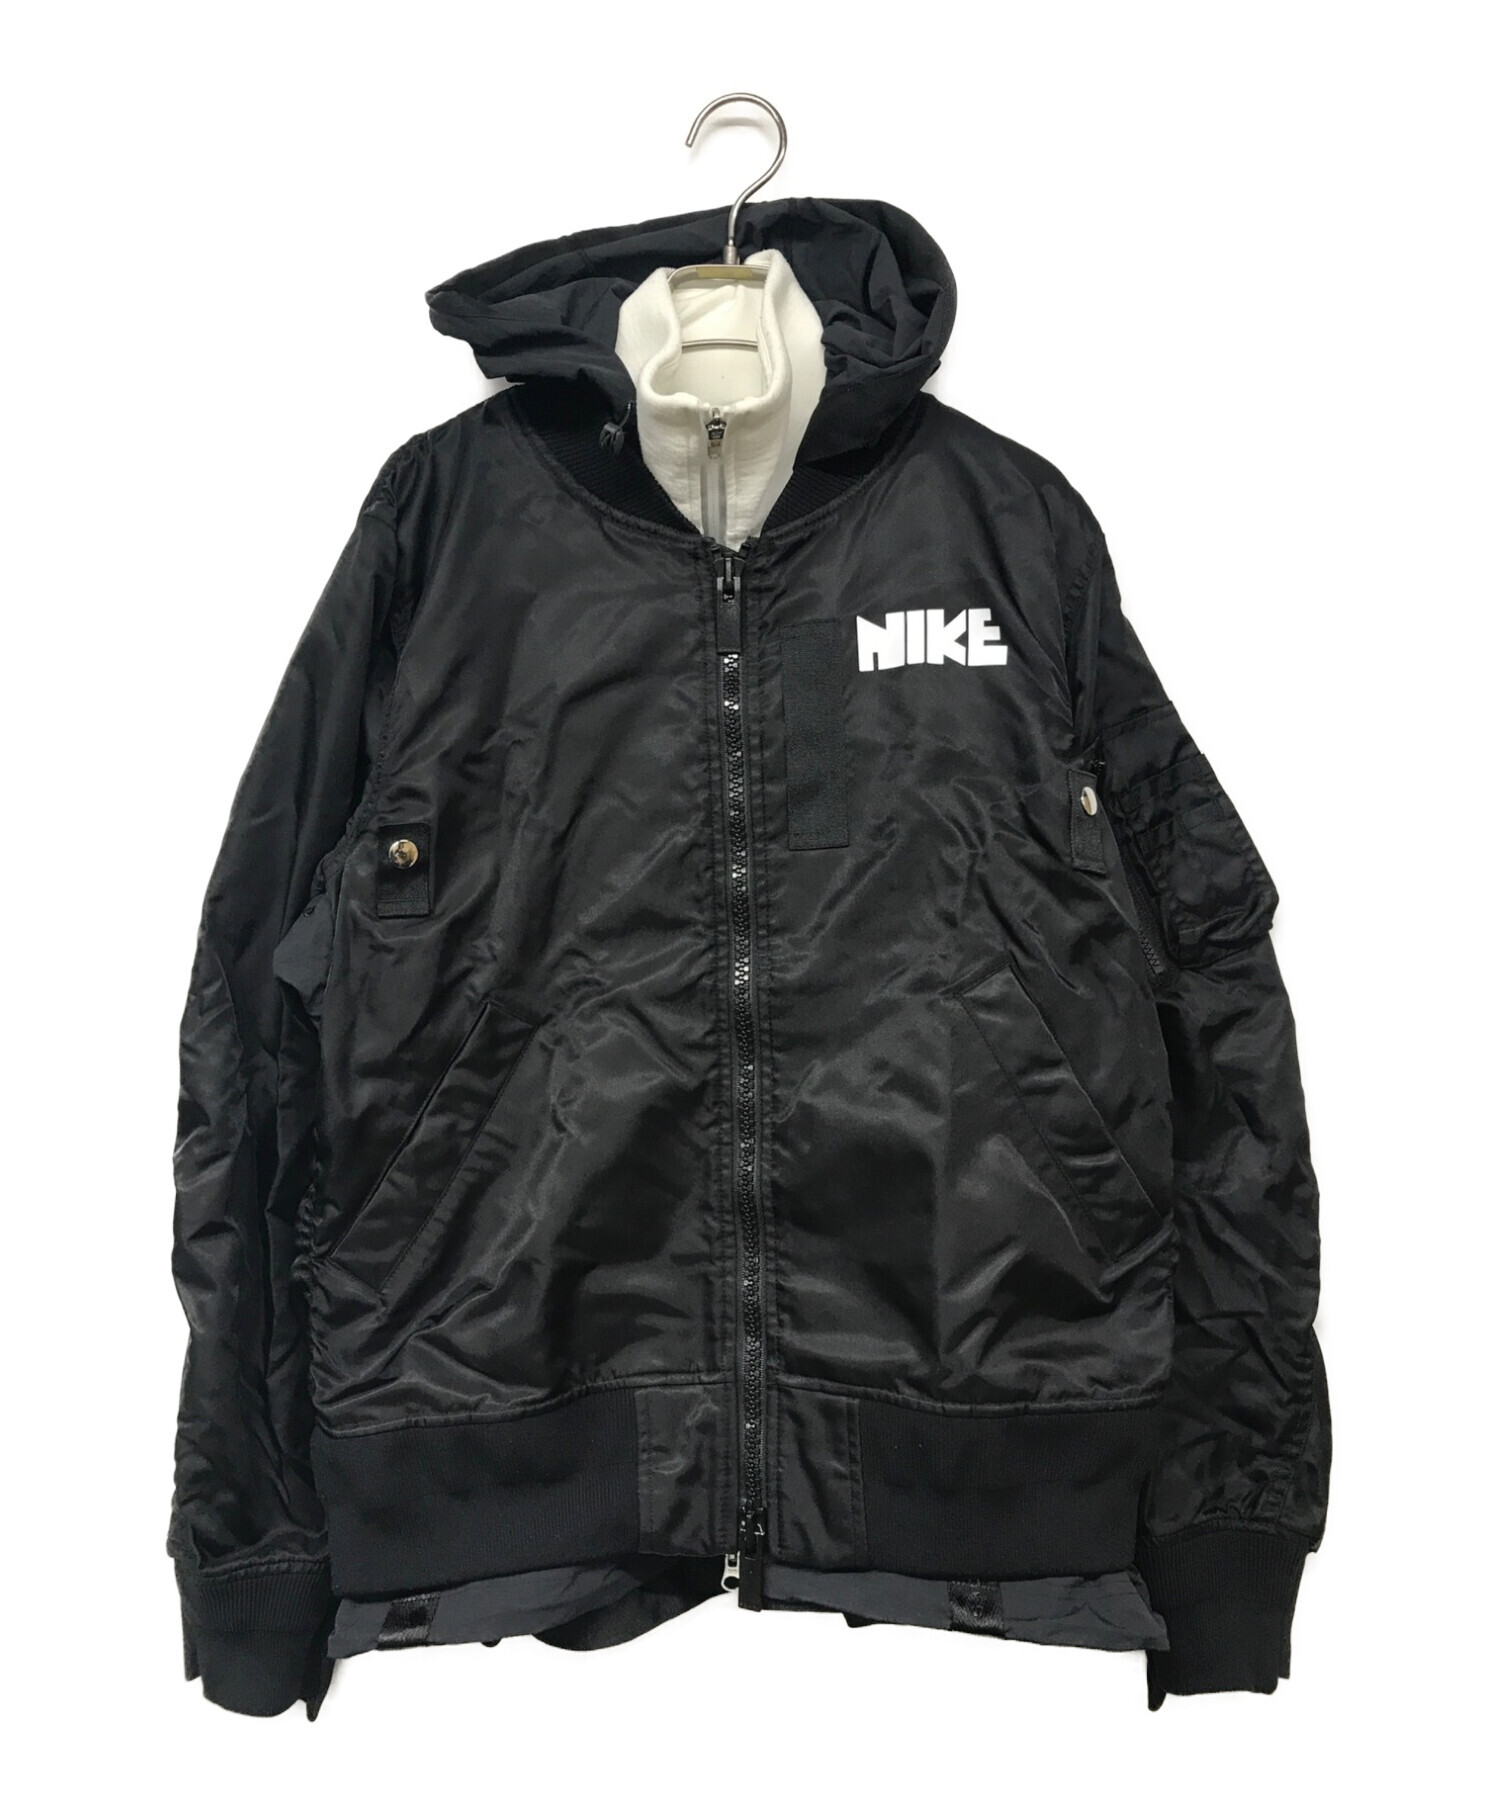 NIKE (ナイキ) sacai (サカイ) NRG LAYERED JKT/NRGレイヤードジャケット ブラック×ホワイト サイズ:S